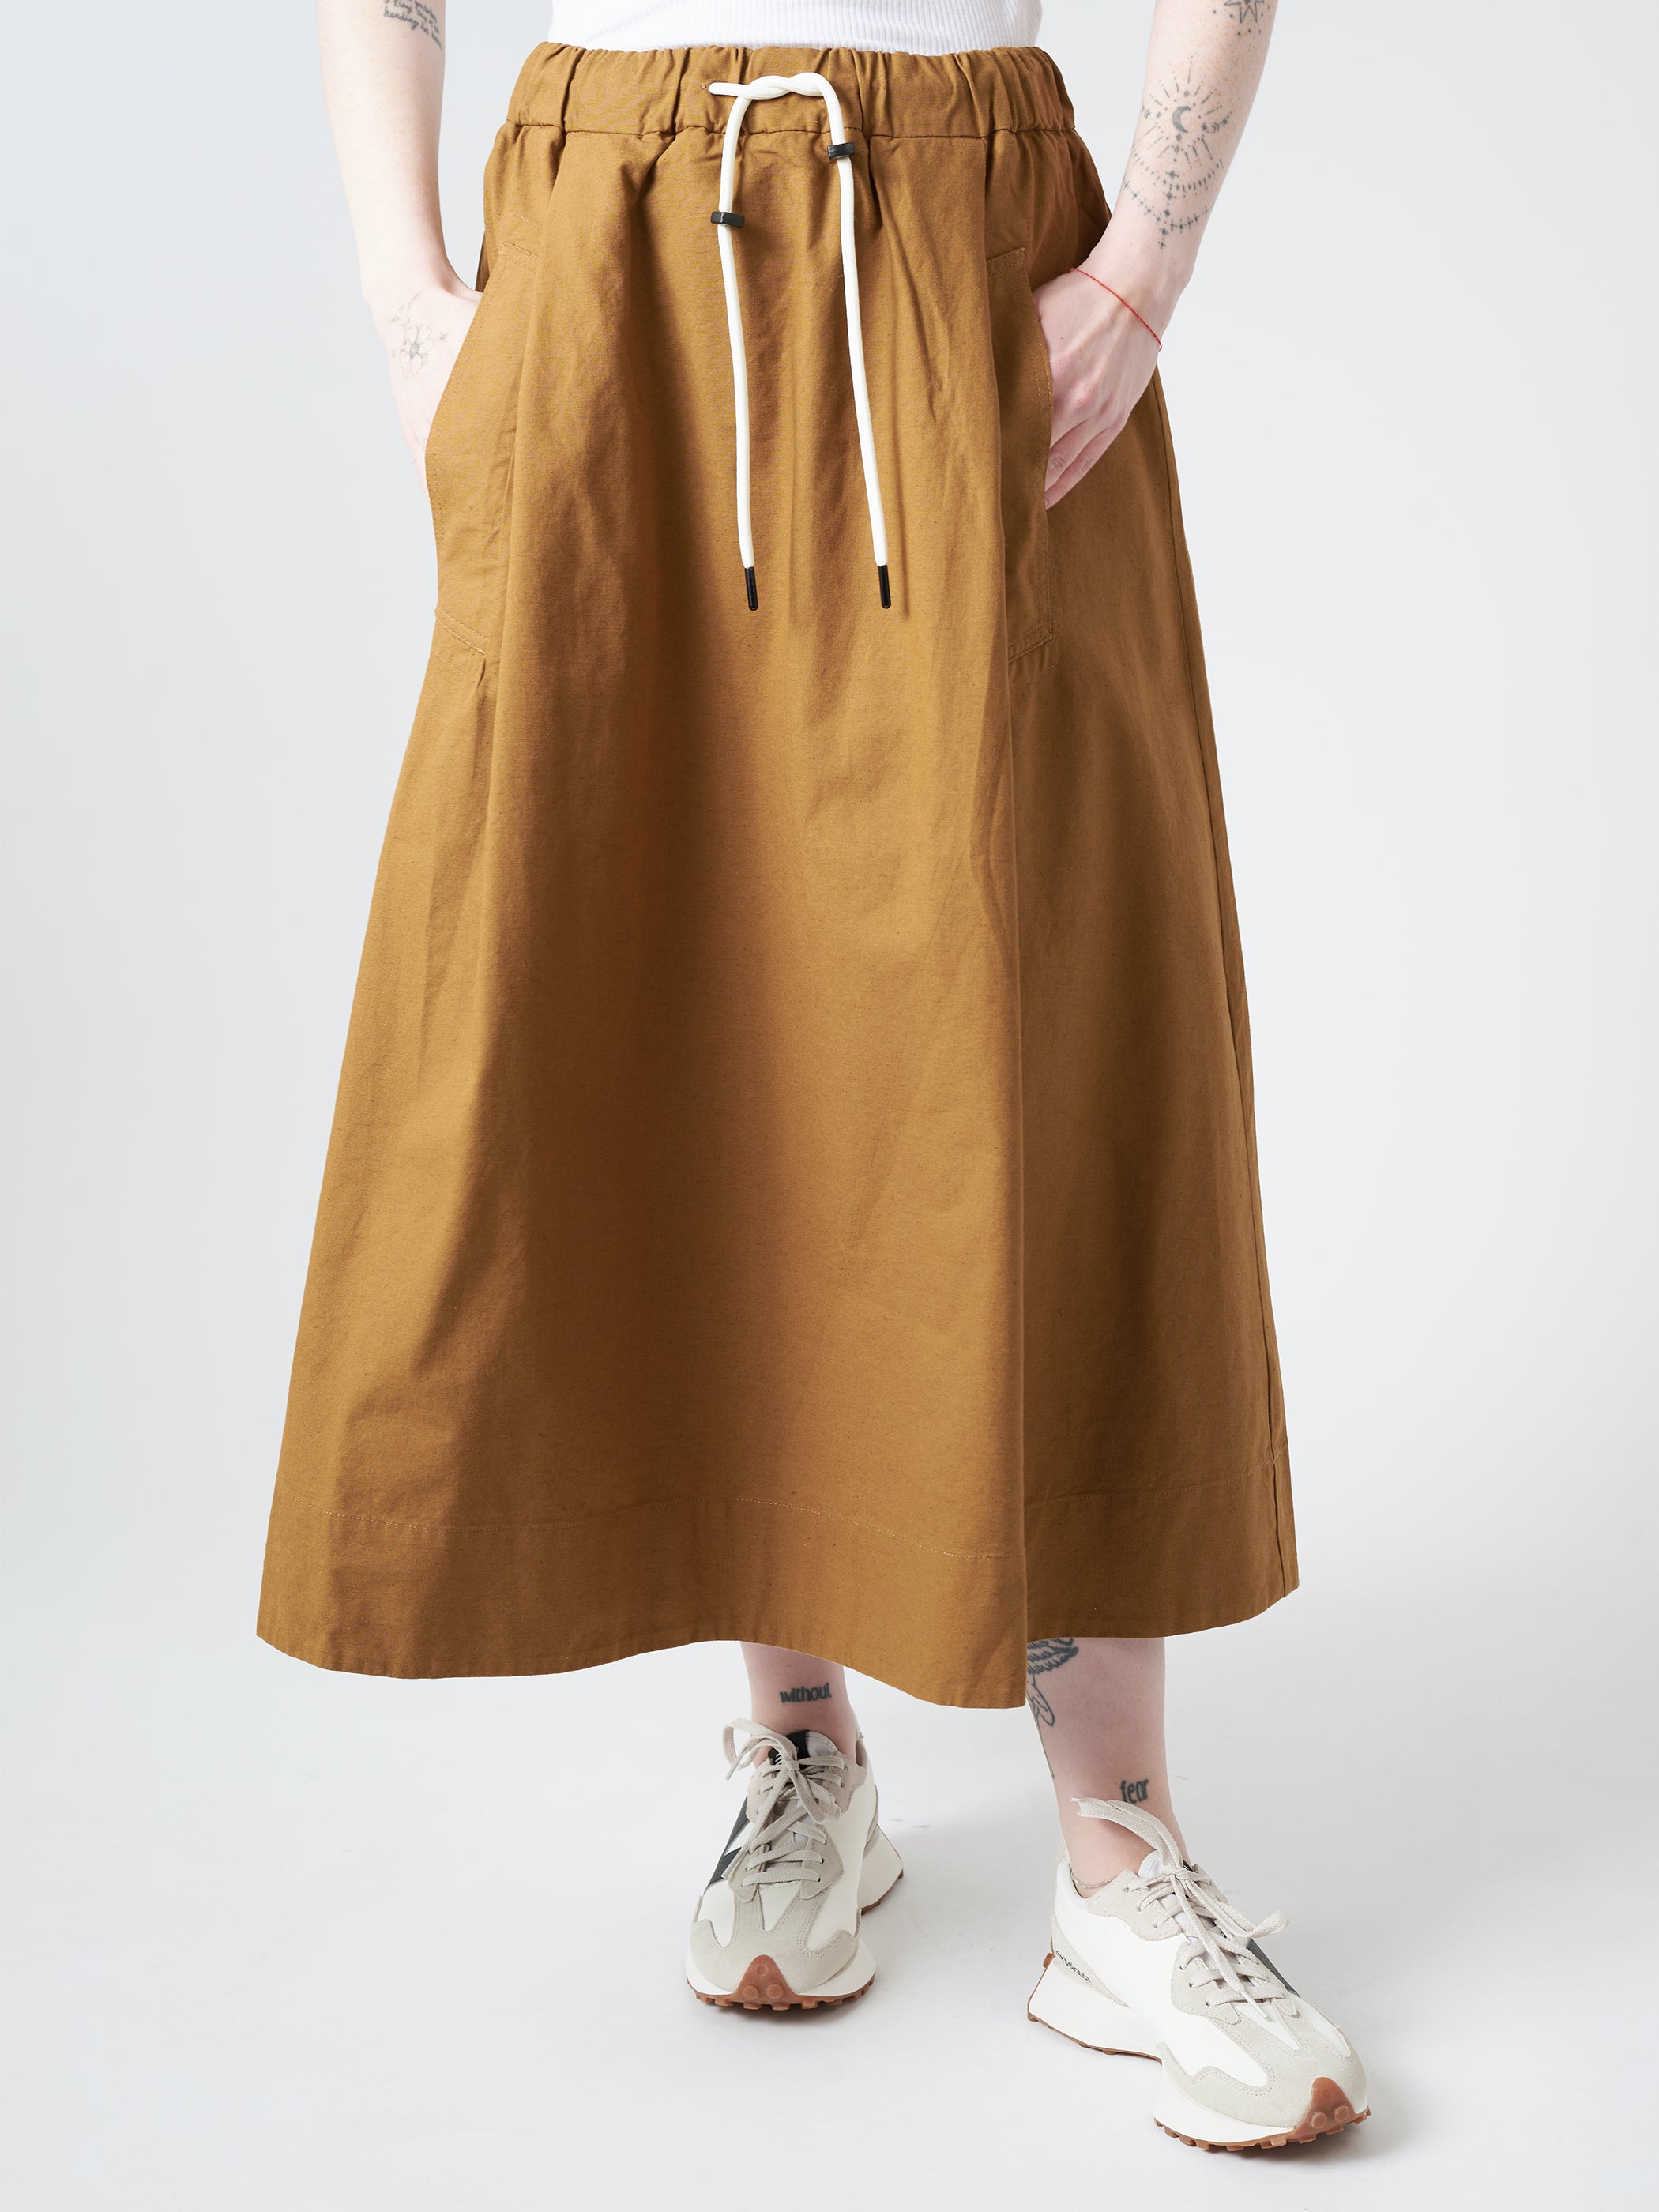 Meadow Skirt